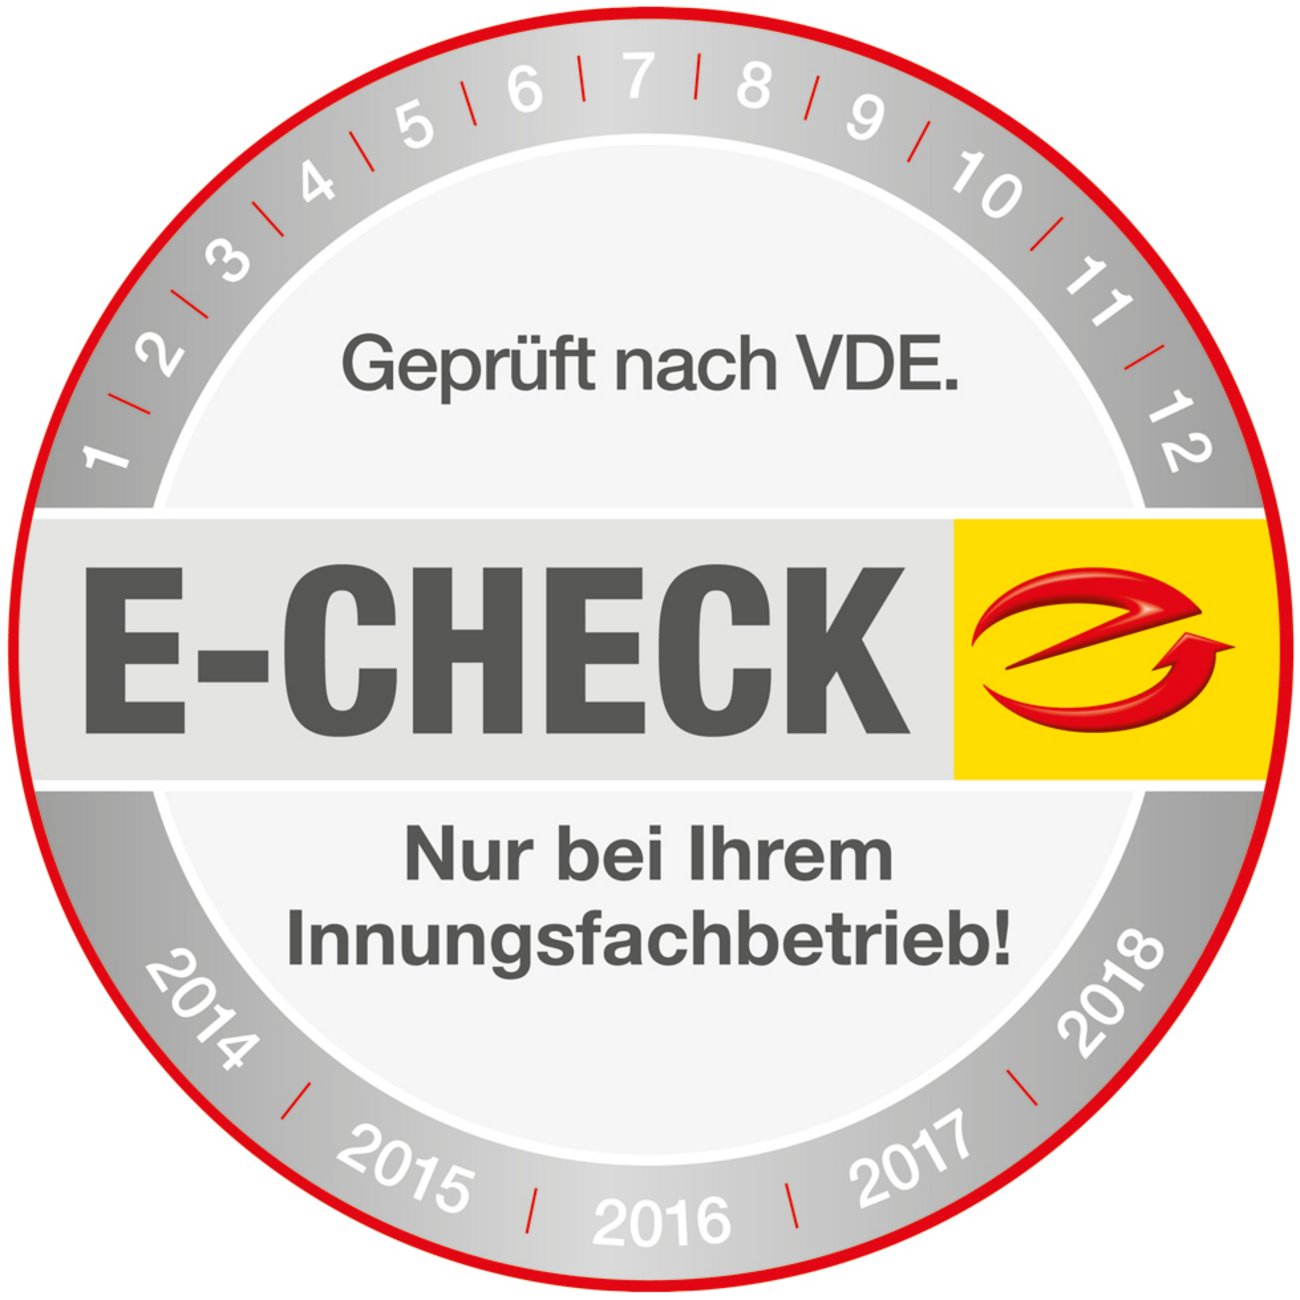 Der E-Check bei Elektro Schulze GmbH in Eckental